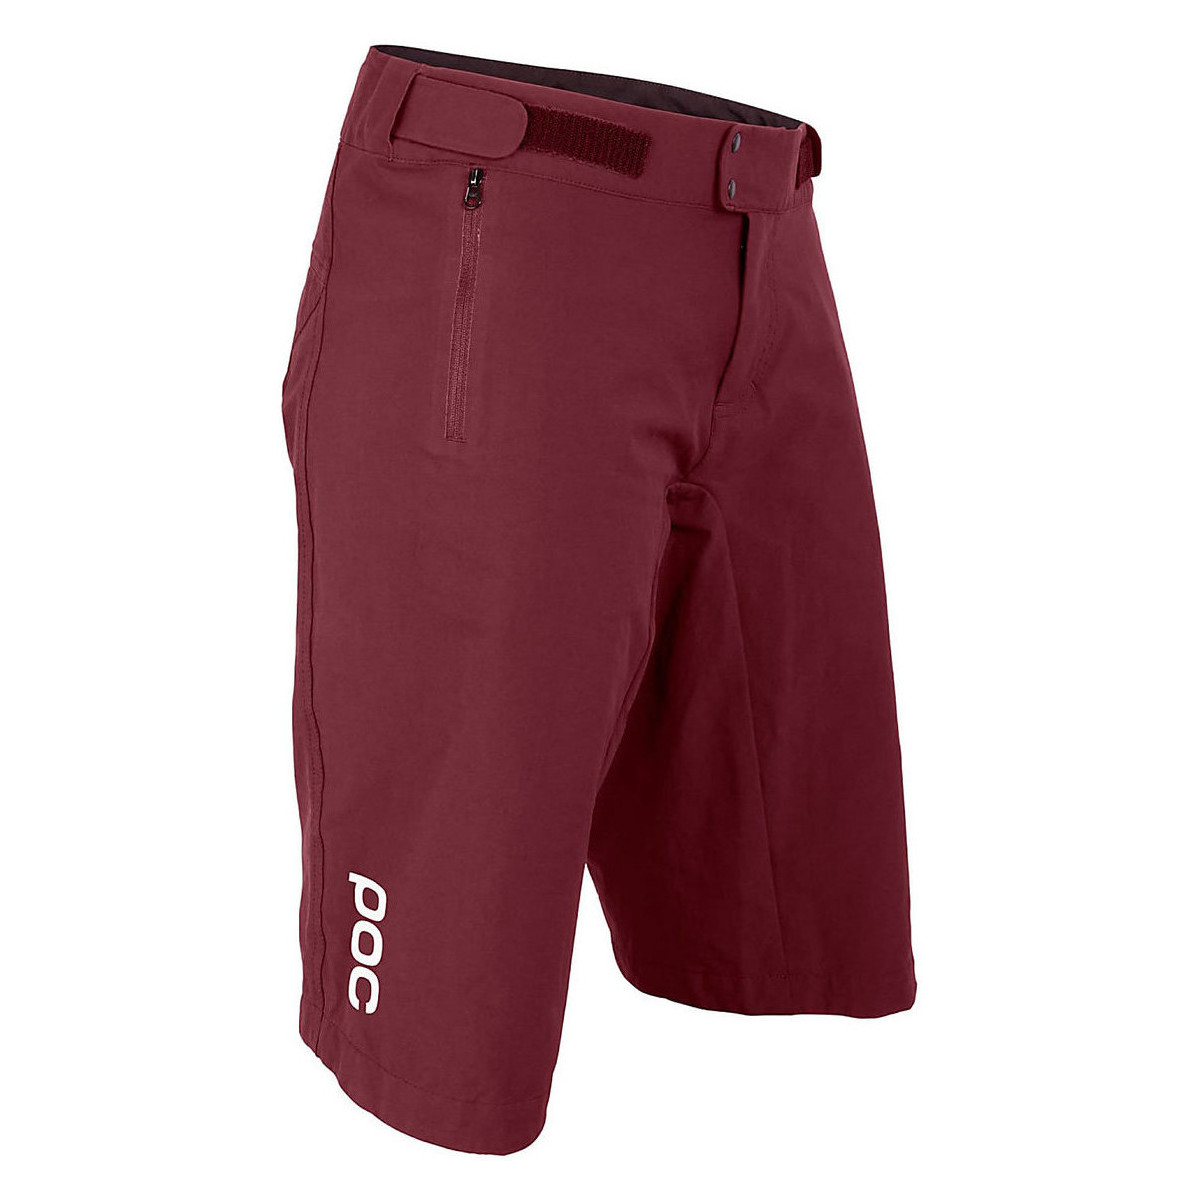 Textil Mulher Shorts / Bermudas Poc 52761-1121 RESISTANCE ENDURO LT WO SHORTS CARBON BORDO Vermelho